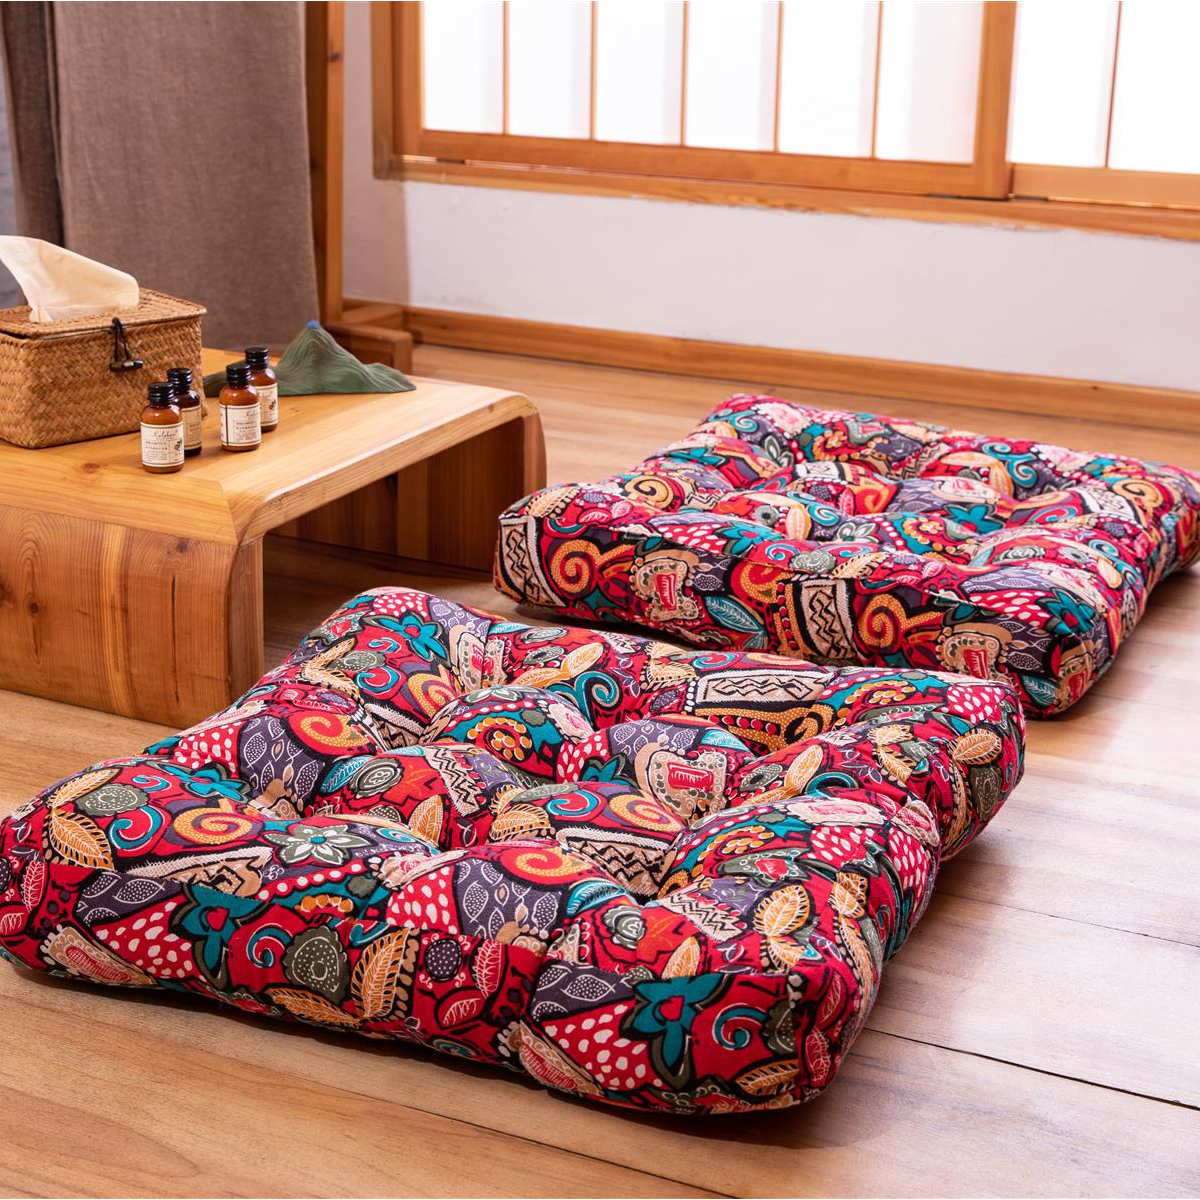 55x55x10cm-Square-Tatami-Cushion-Cotton-Linen-Floor-Pillow-Chair-Seat-Pad-Mat-1842990-8